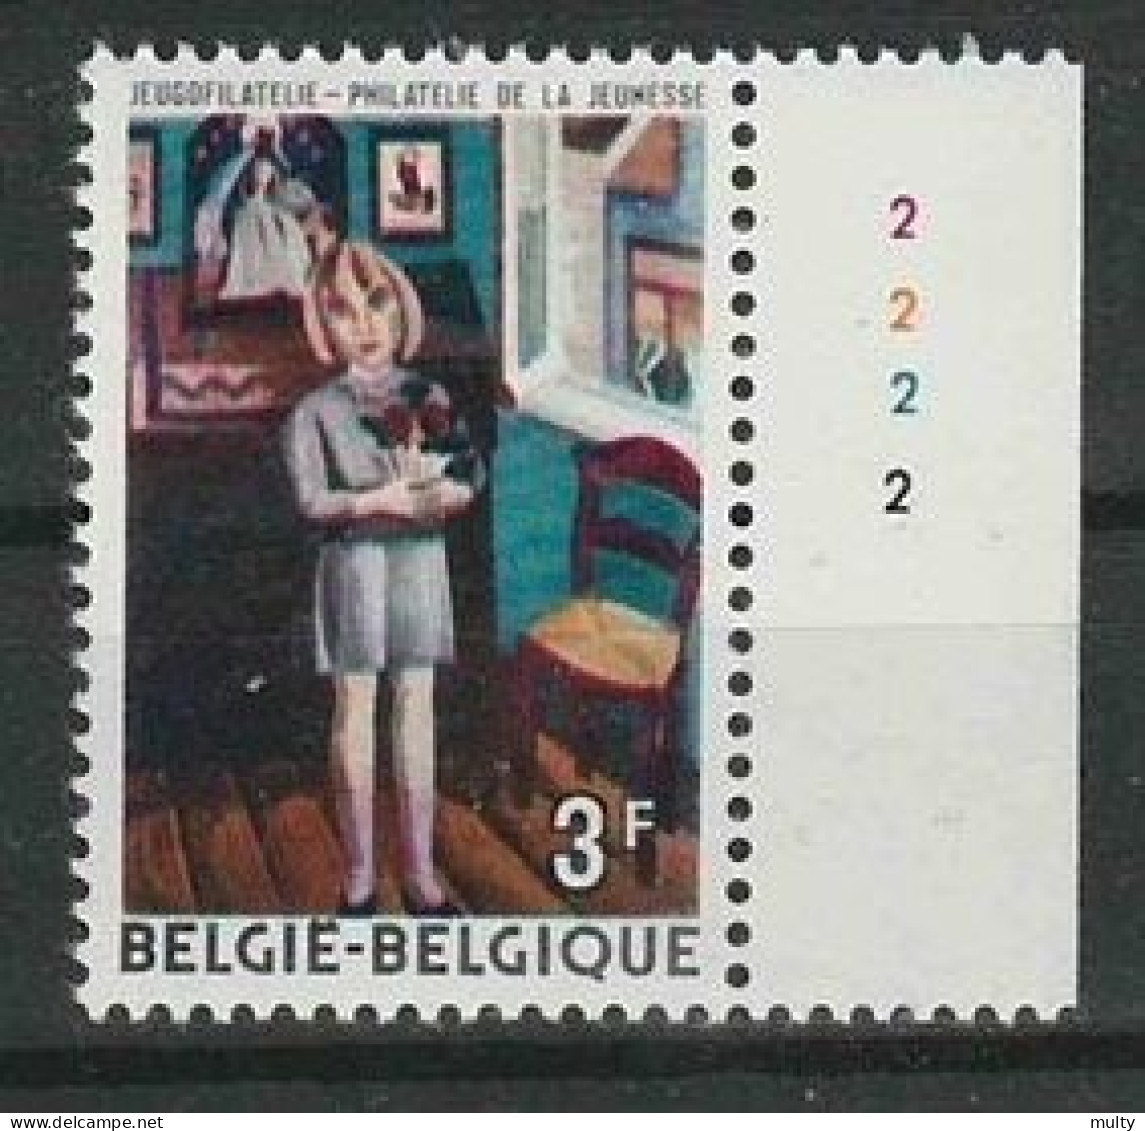 België OCB 1638 ** MNH Met Plaatnummer 2. - 1971-1980